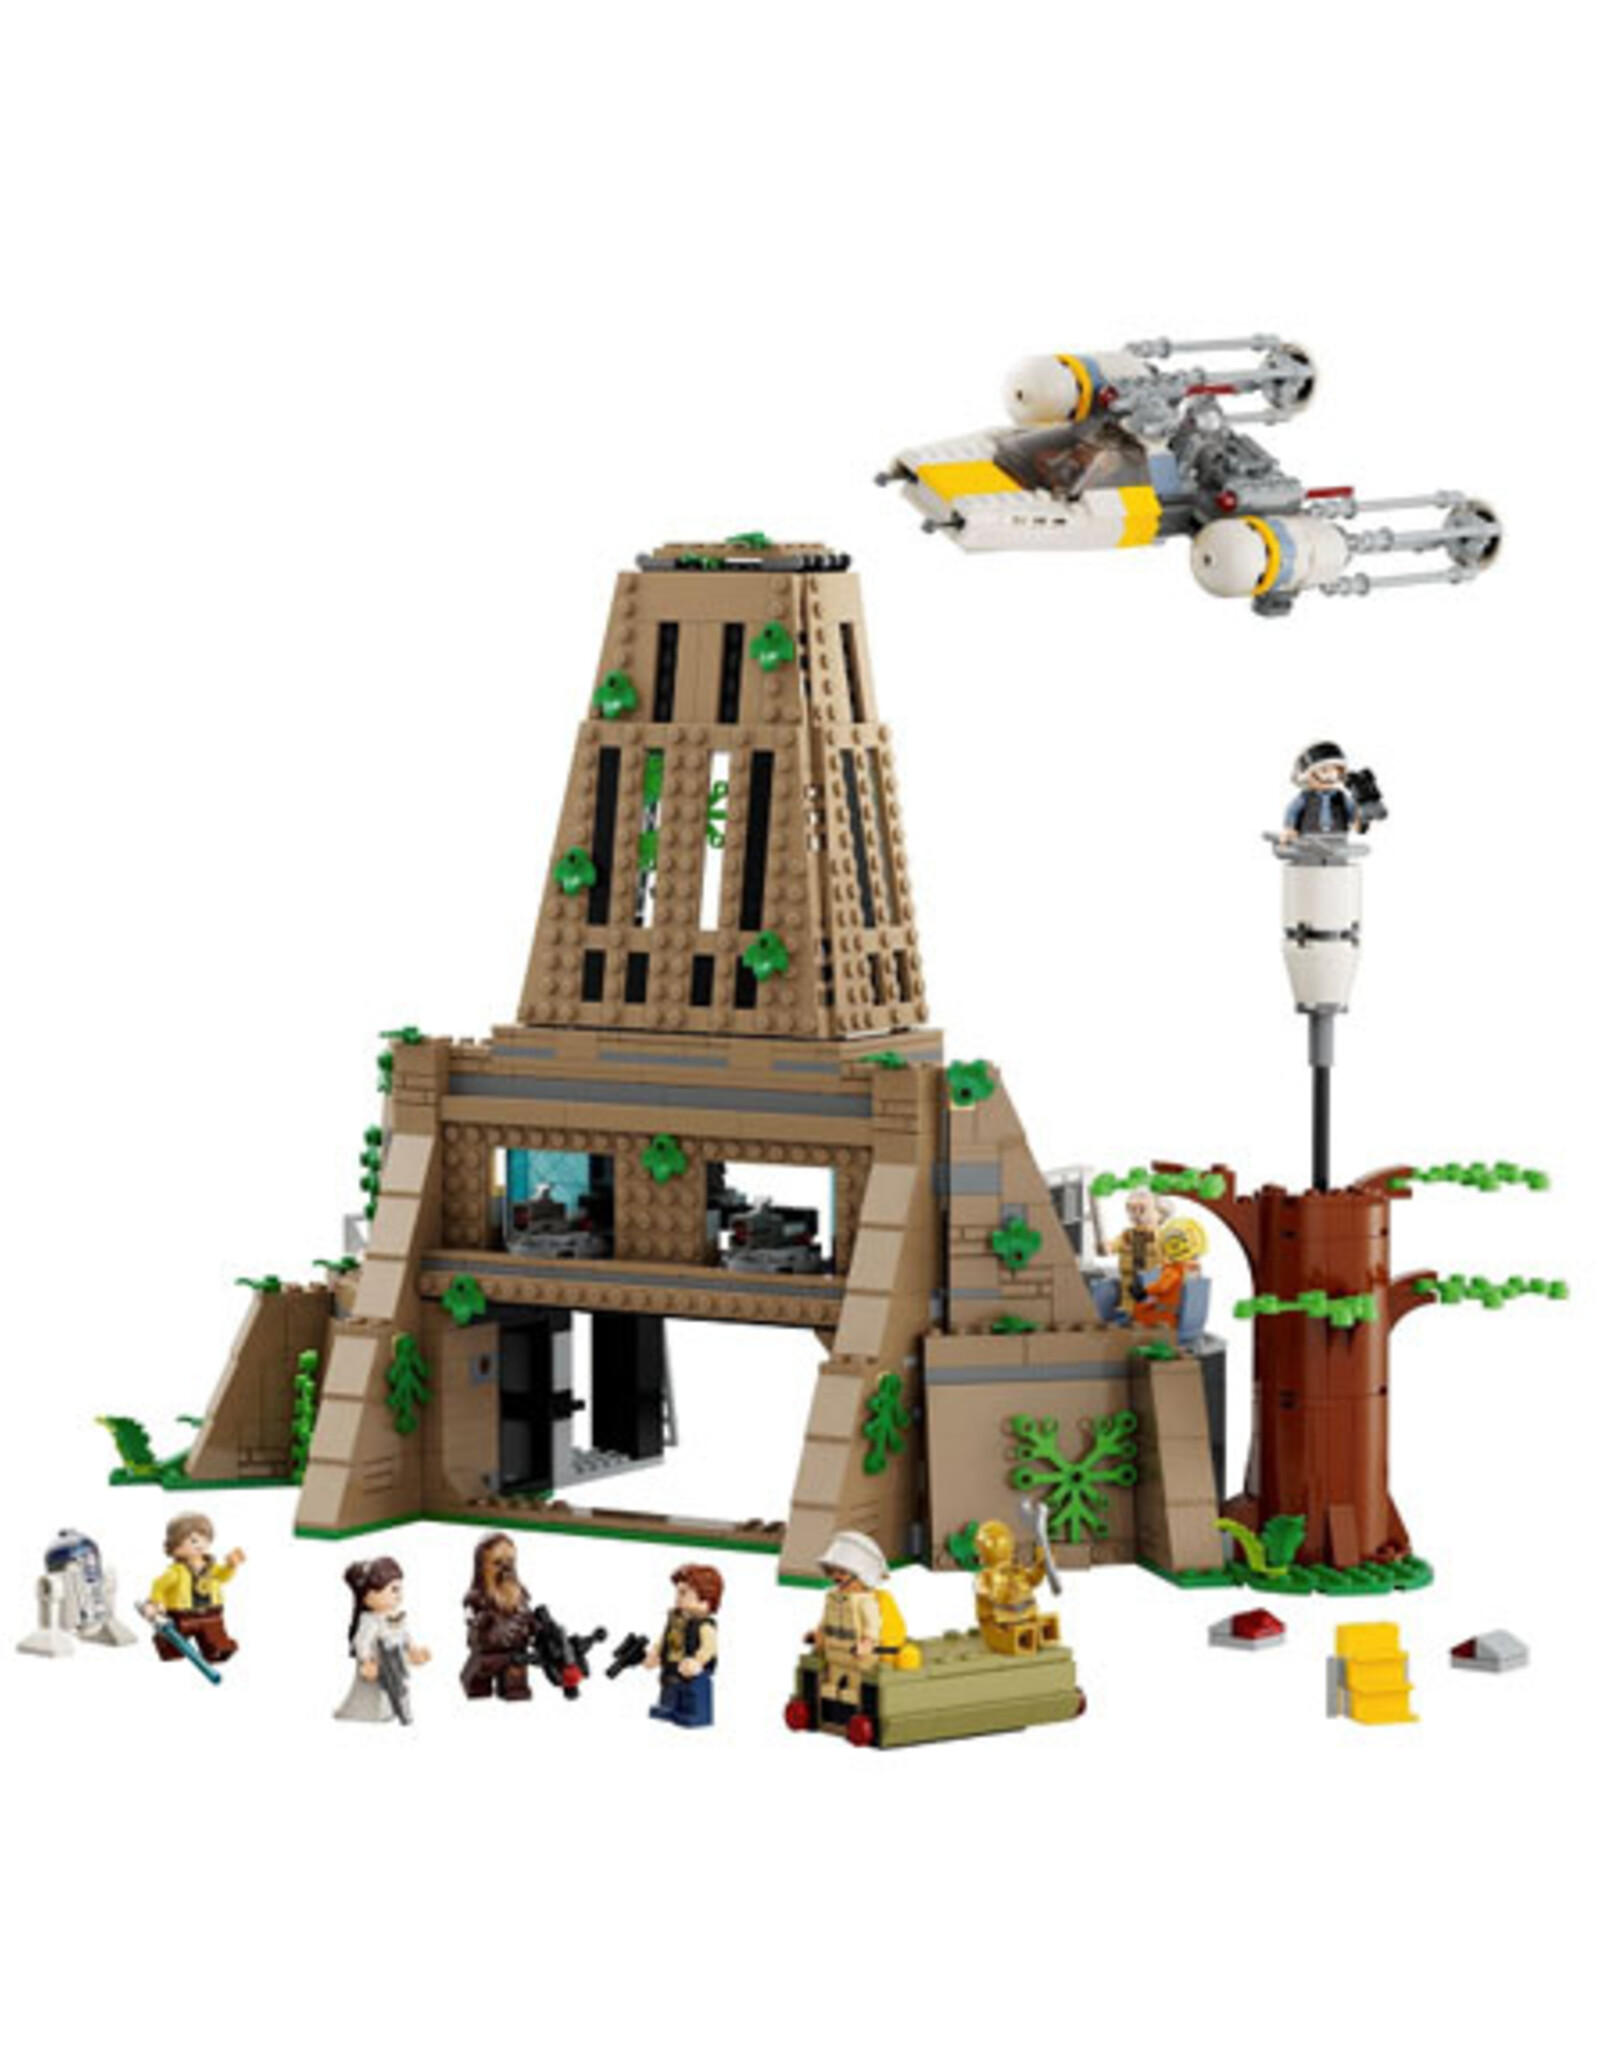 LEGO LEGO 75365 Yavin 4 Rebel Base STAR WARS